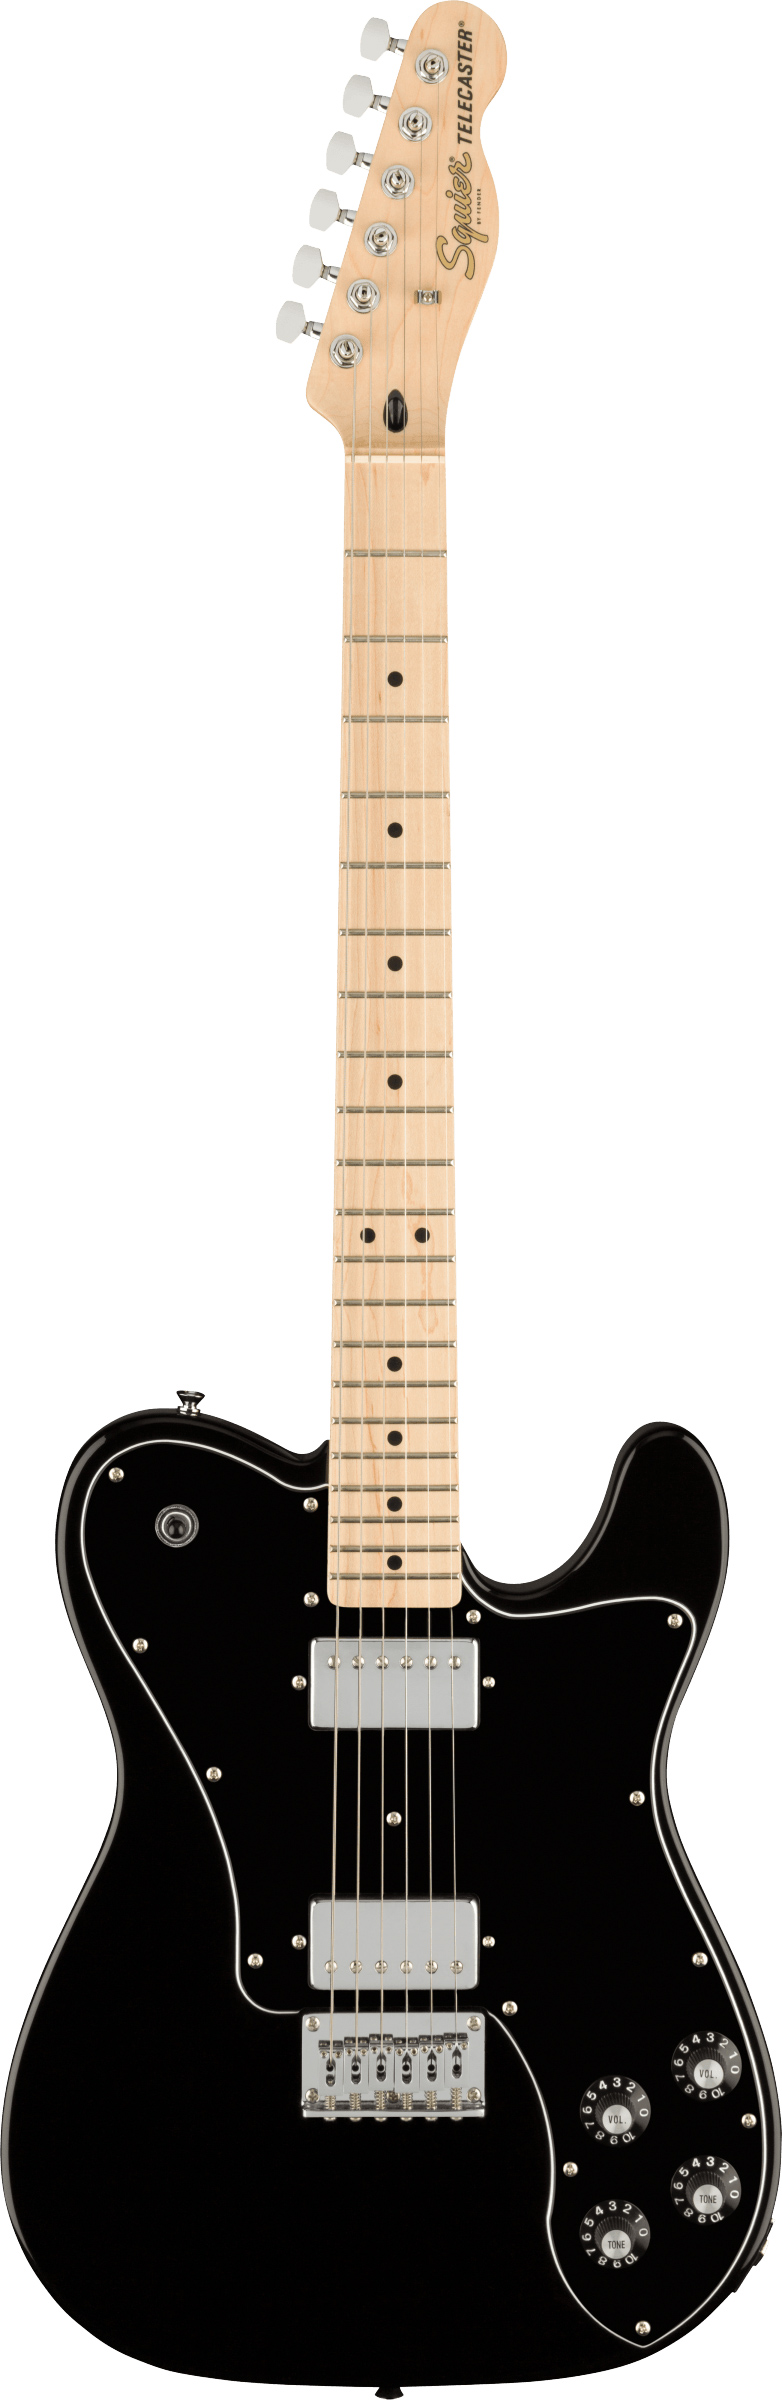 Fender Squier Affinity Telecaster Deluxe - BlackのeBay公認海外通販 ...